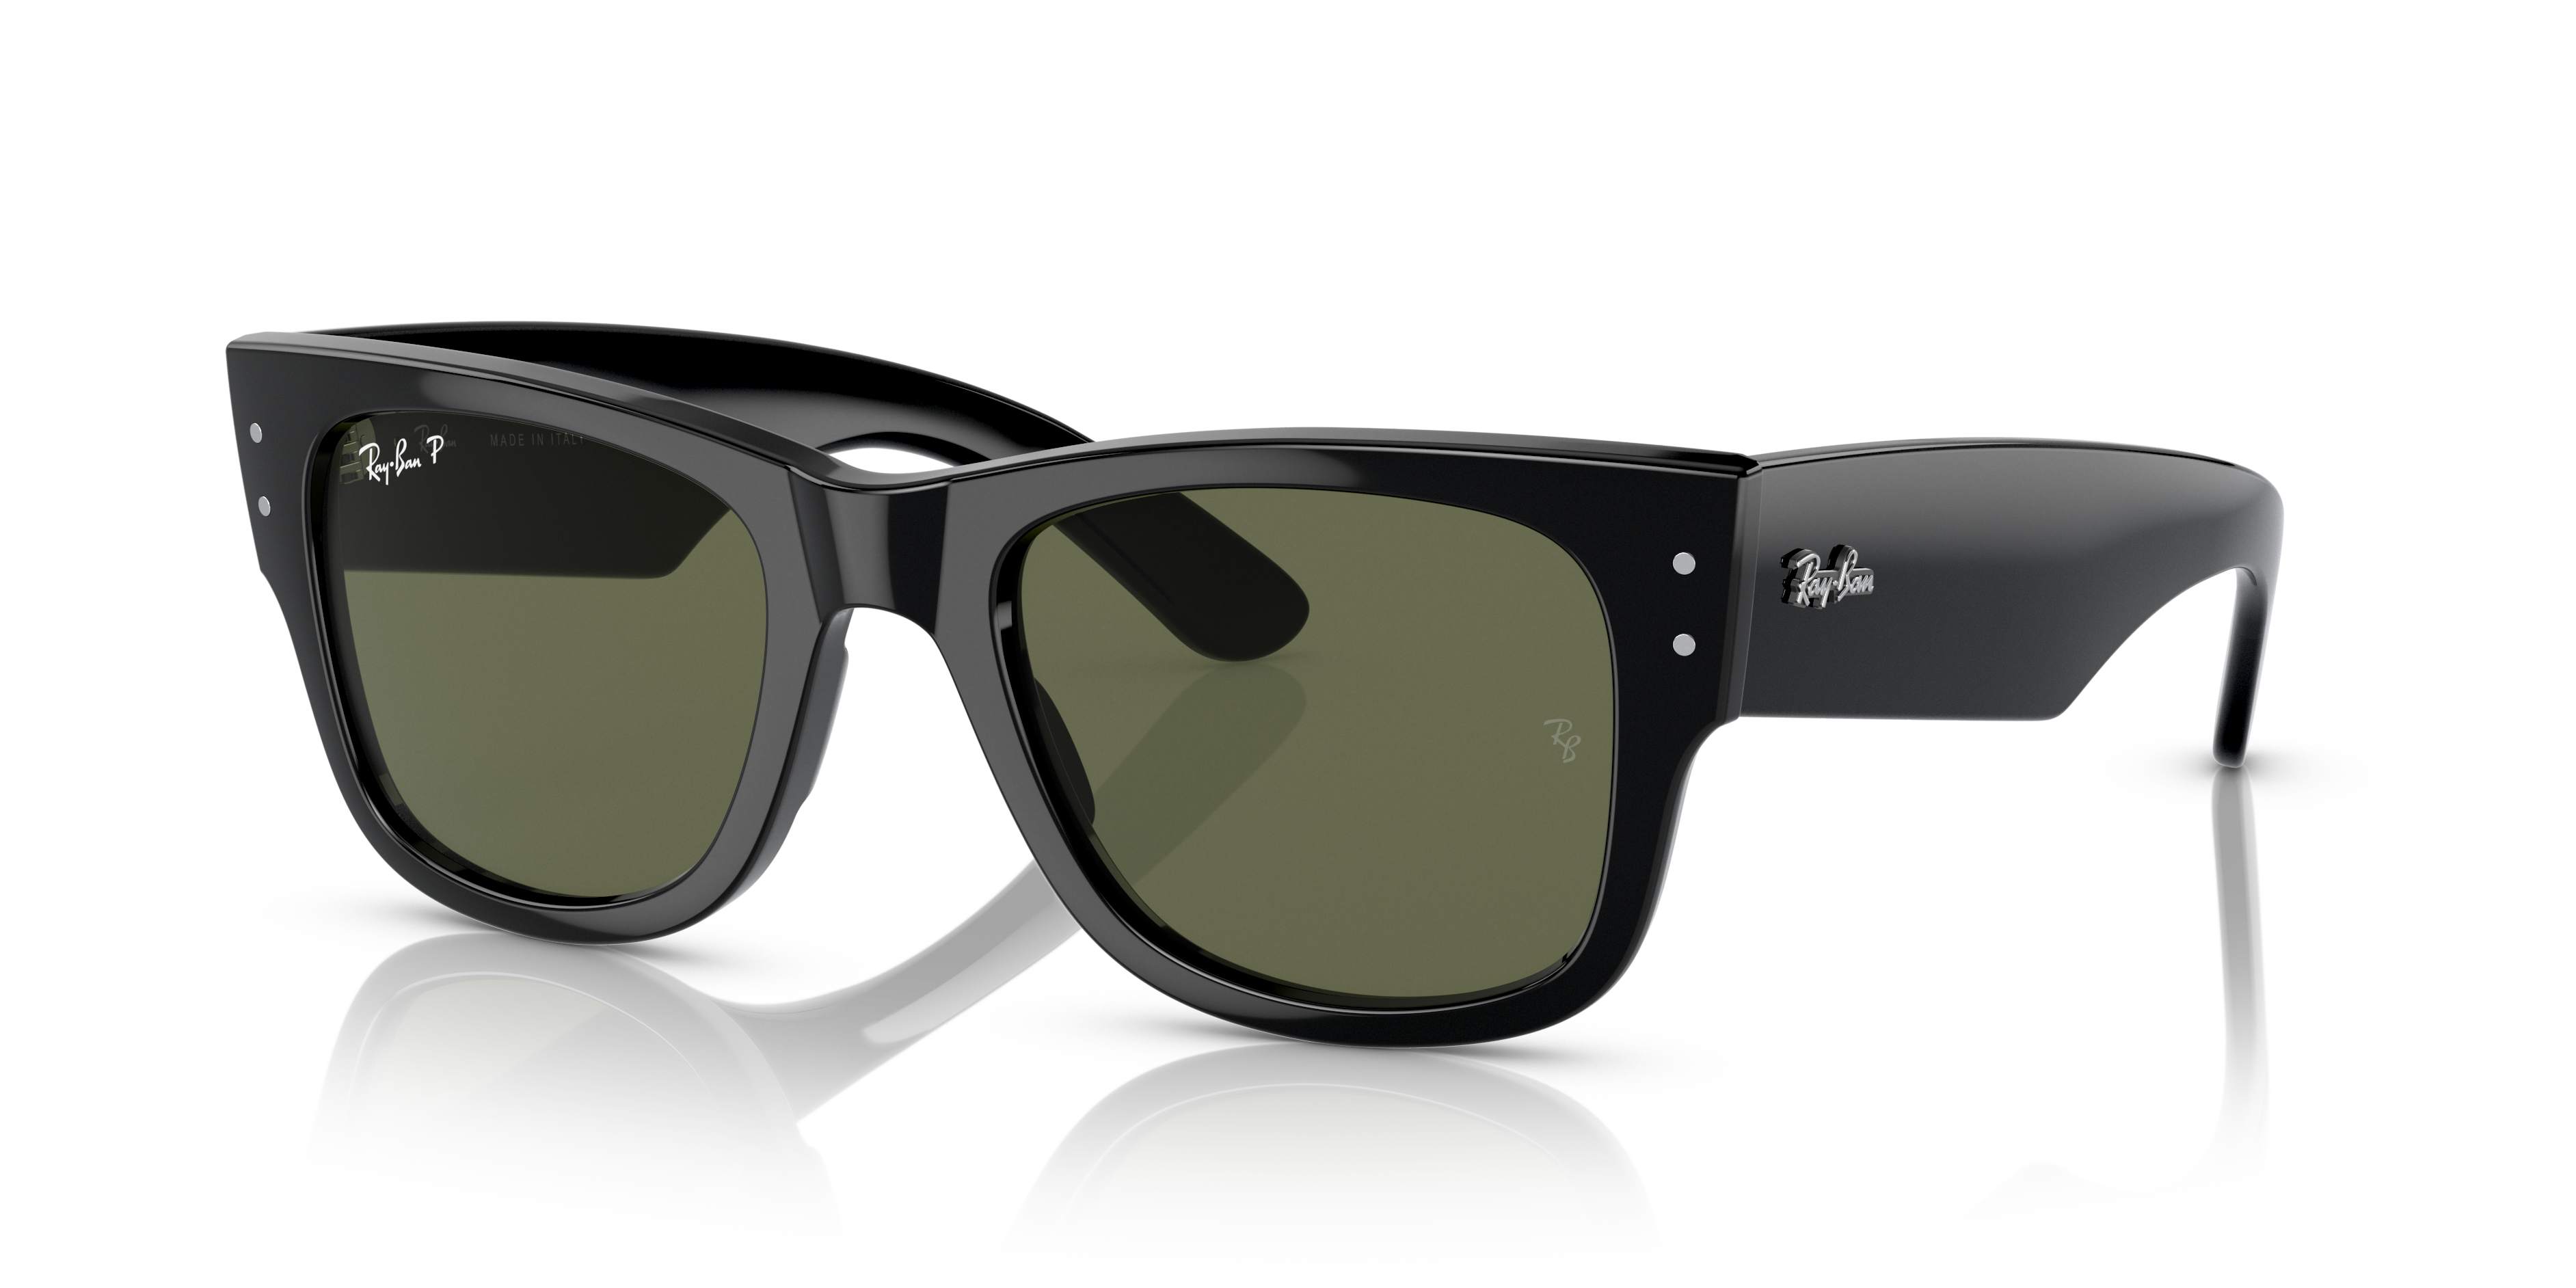 Mega Wayfarer Sunglasses in Black and Green | Ray-Ban®